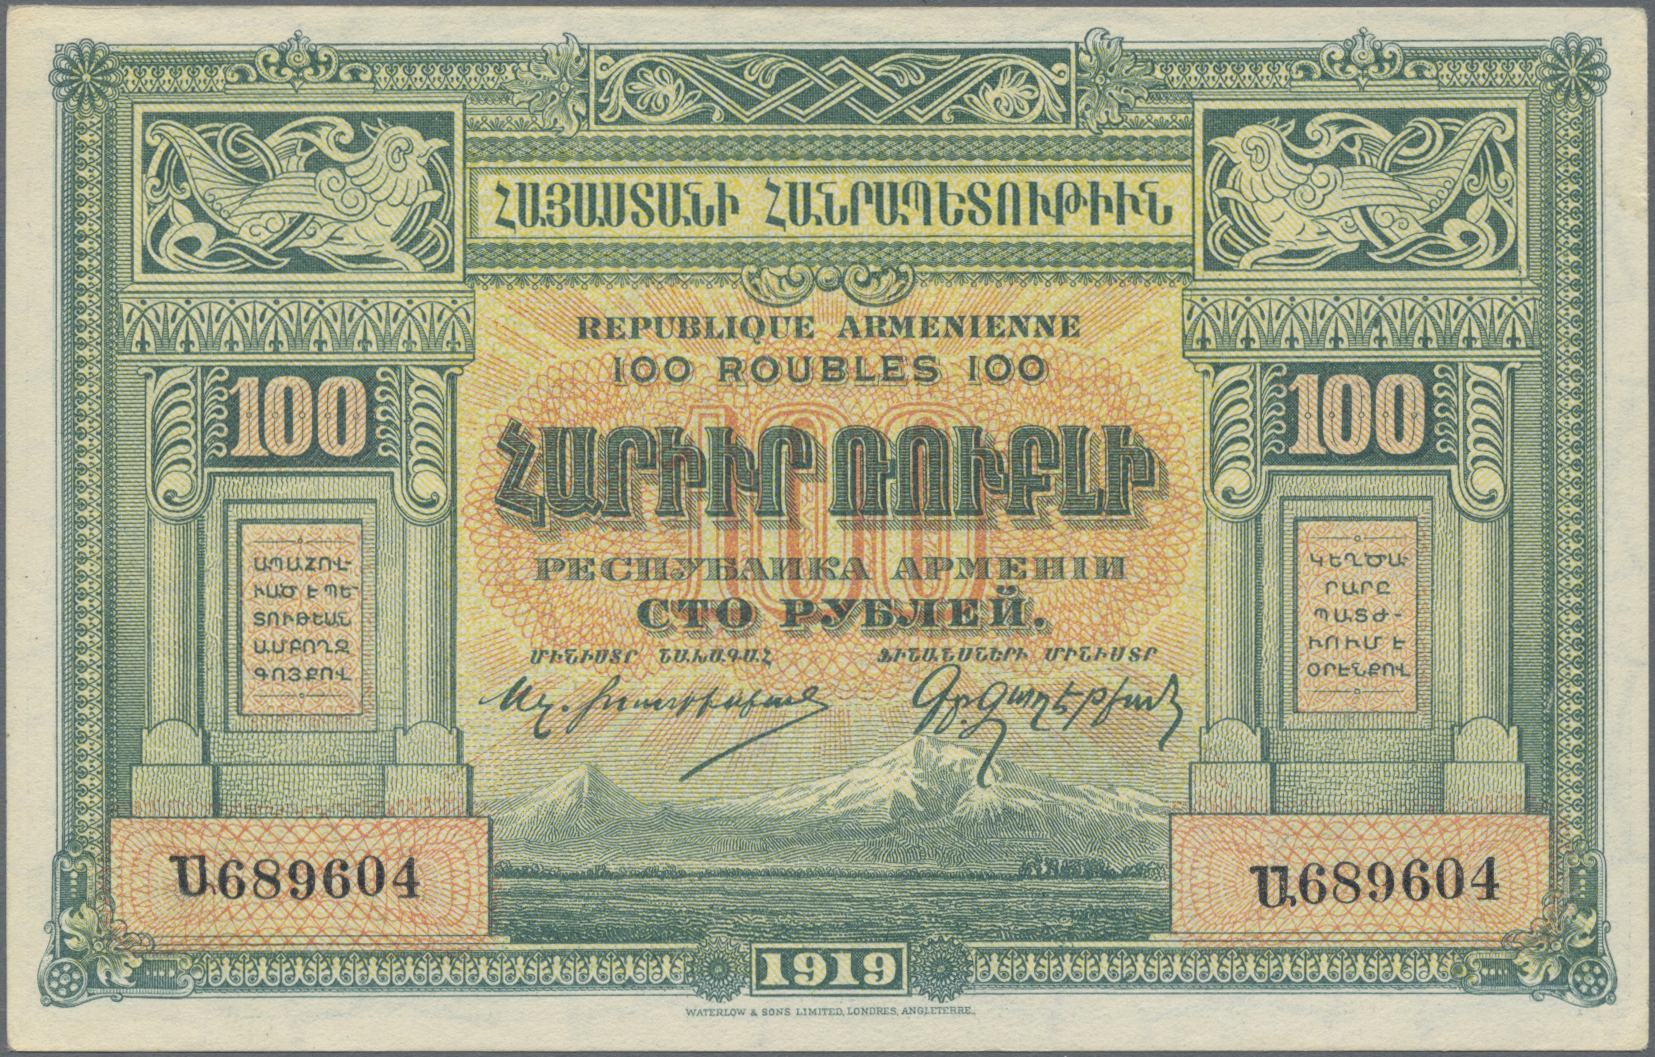 Lot 00046 - Armenia / Armenien | Banknoten  -  Auktionshaus Christoph Gärtner GmbH & Co. KG 55th AUCTION - Day 1